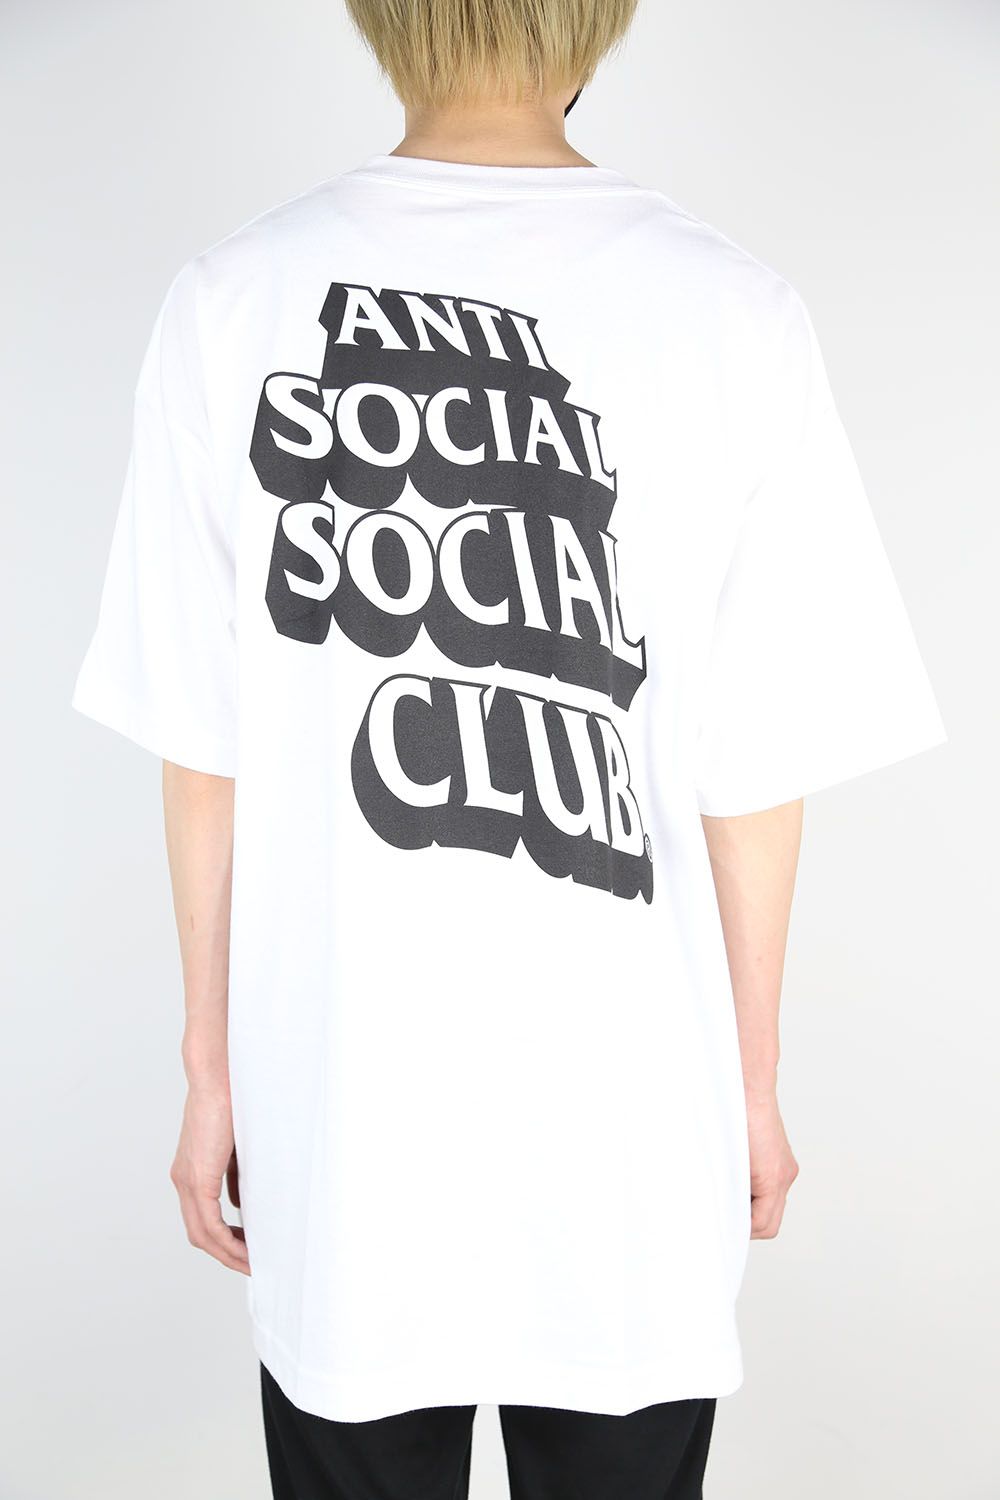 Anti Social Social Club - アンチソーシャルソーシャルクラブ | 通販 ...